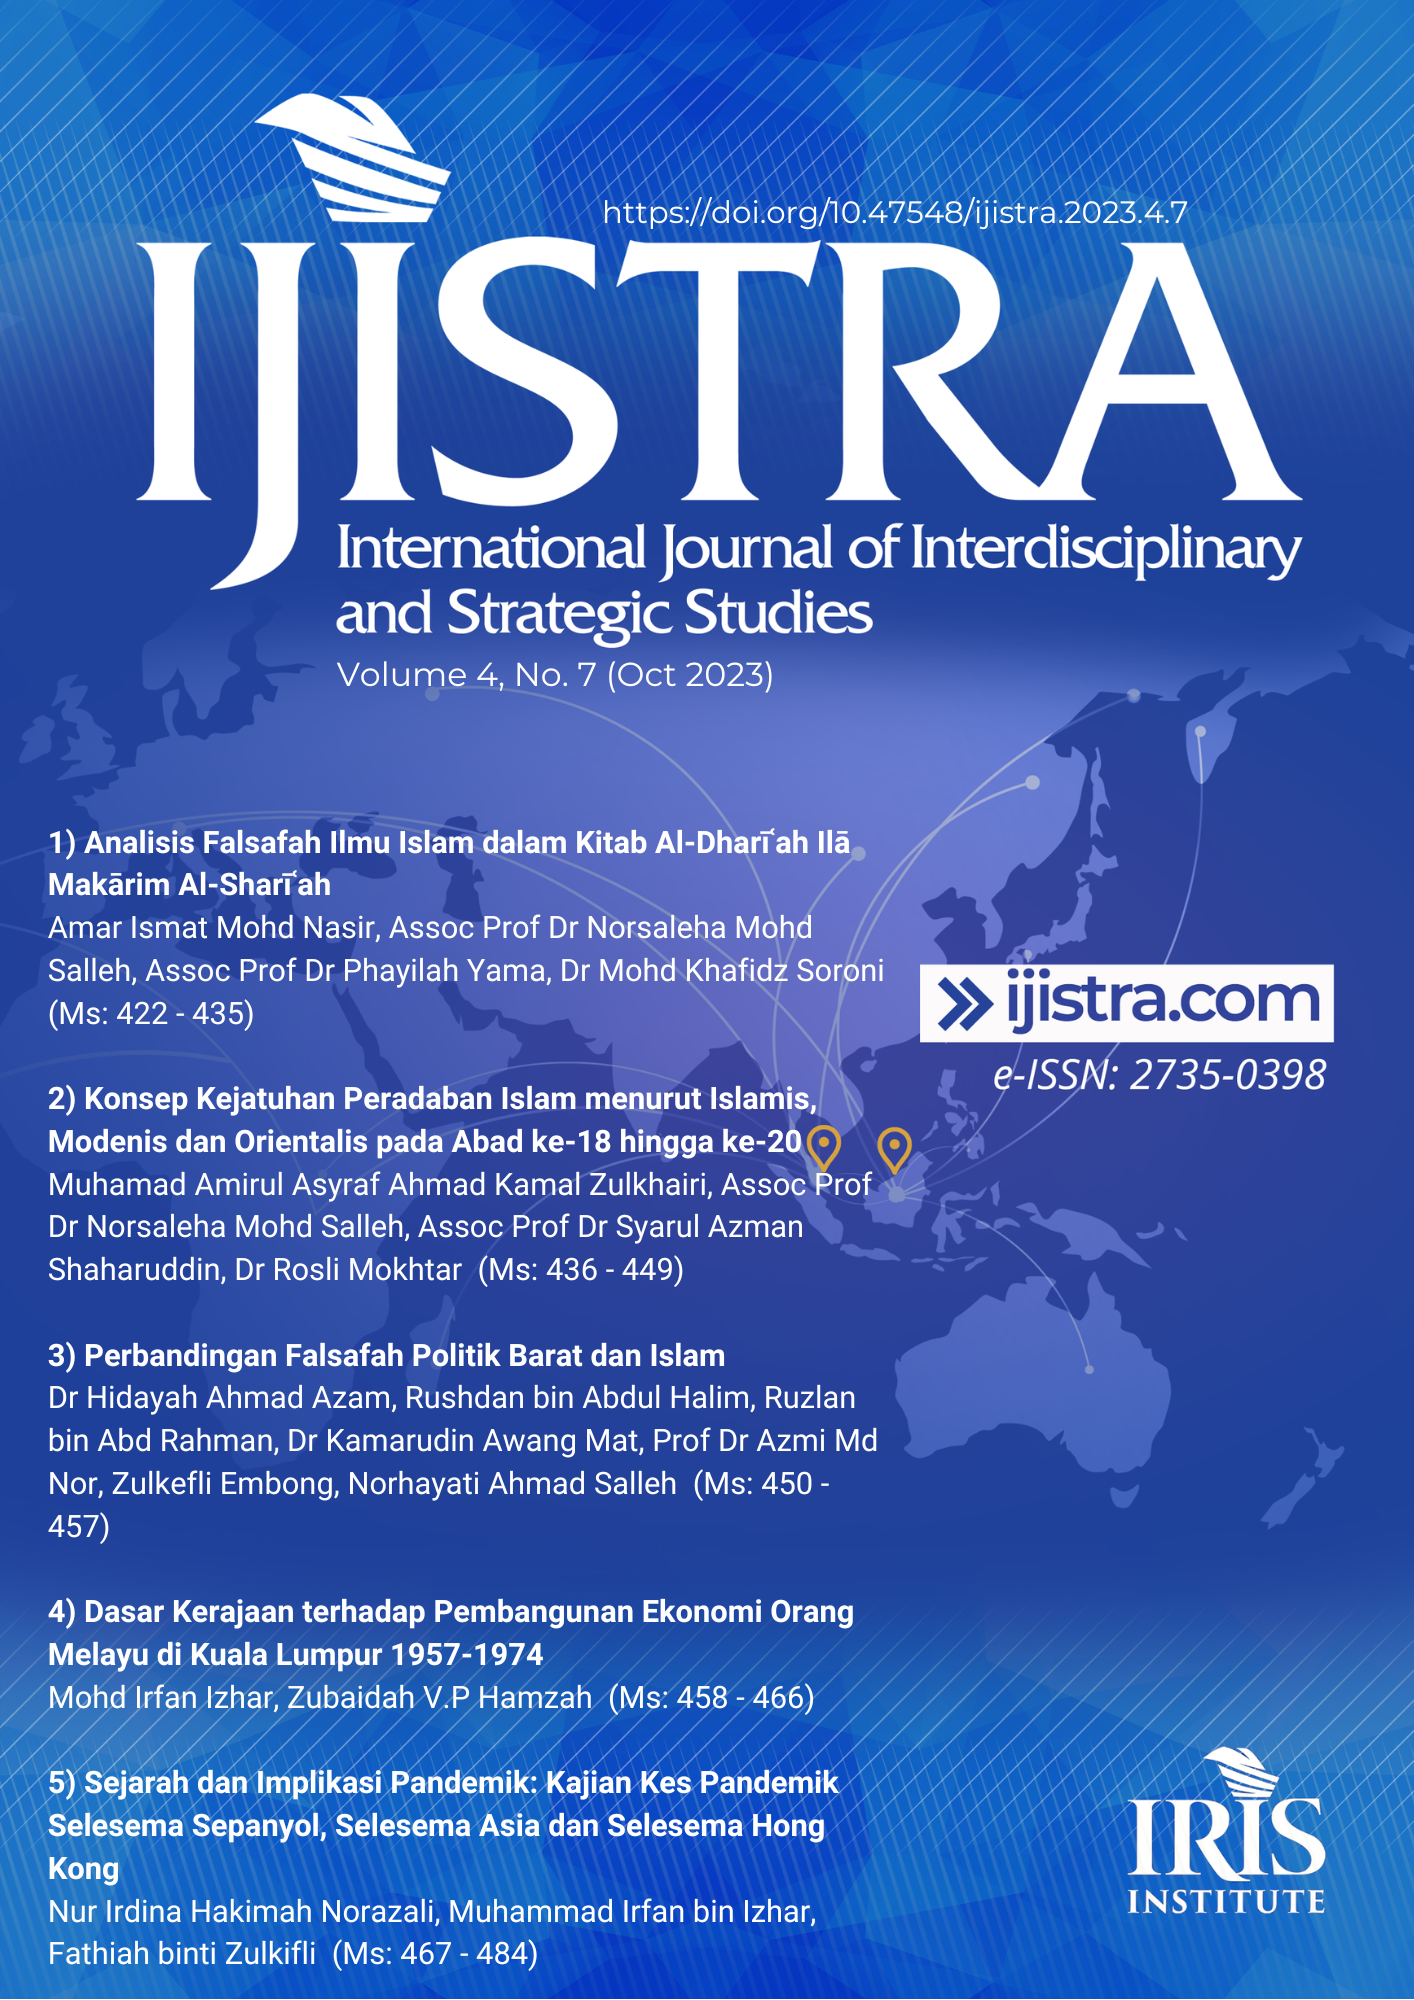 					View Vol. 4 No. 7 (2023): International Journal of Interdisciplinary and Strategic Studies (IJISTRA)
				